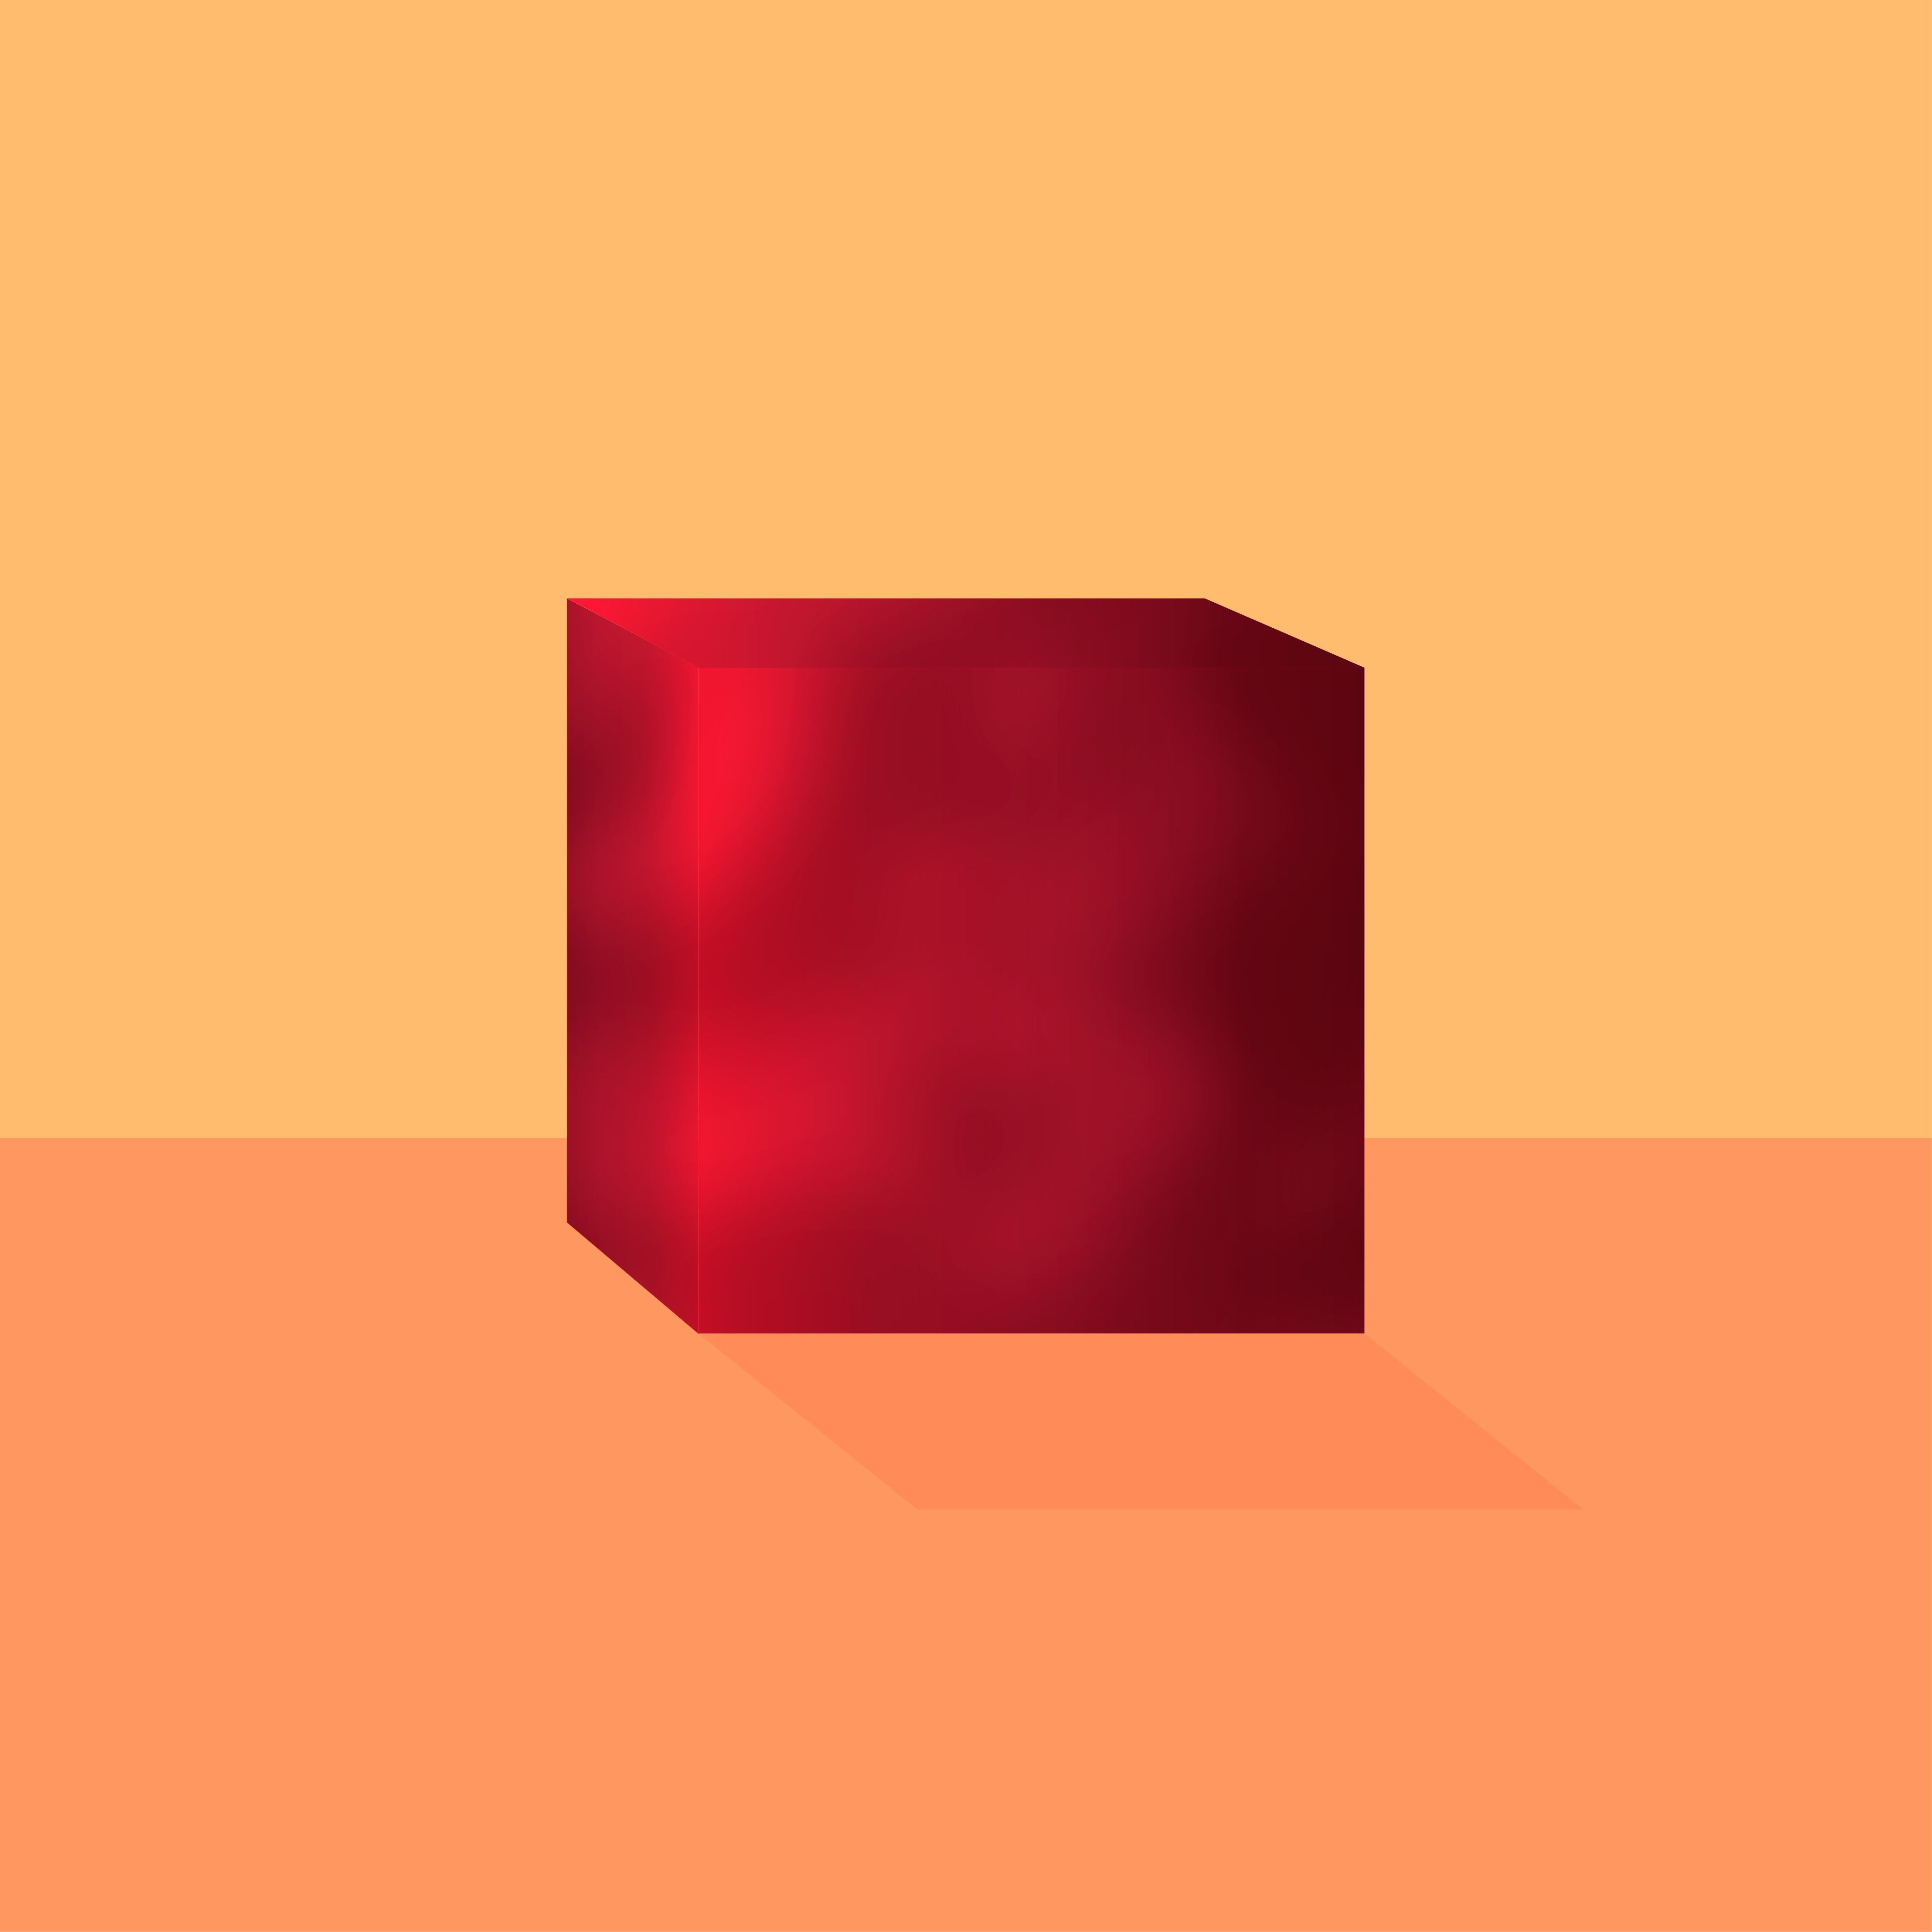 Cube #22